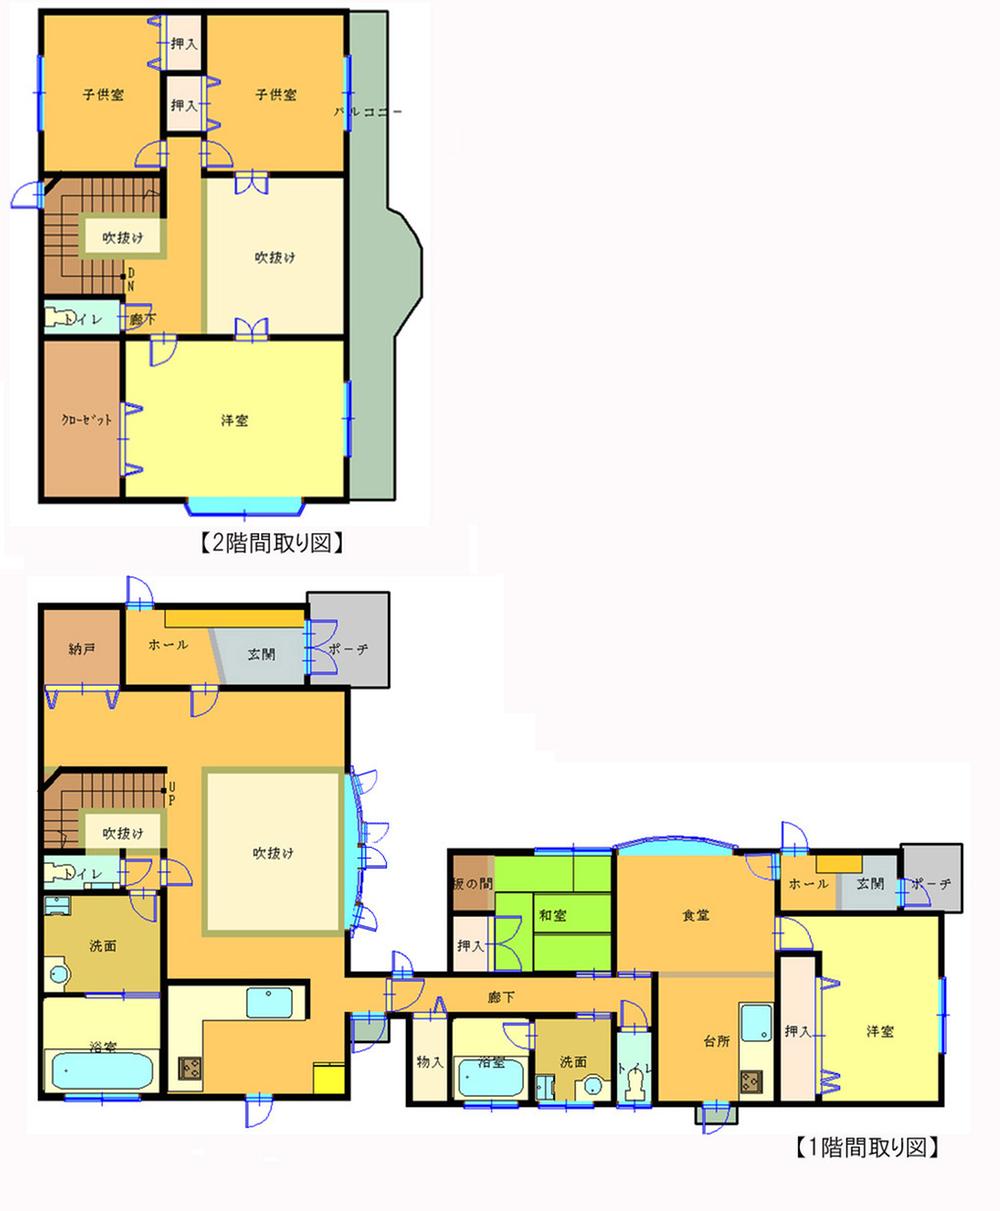 Floor plan. 28 million yen, 5LDDKK, Land area 416.66 sq m , Building area 192.04 sq m